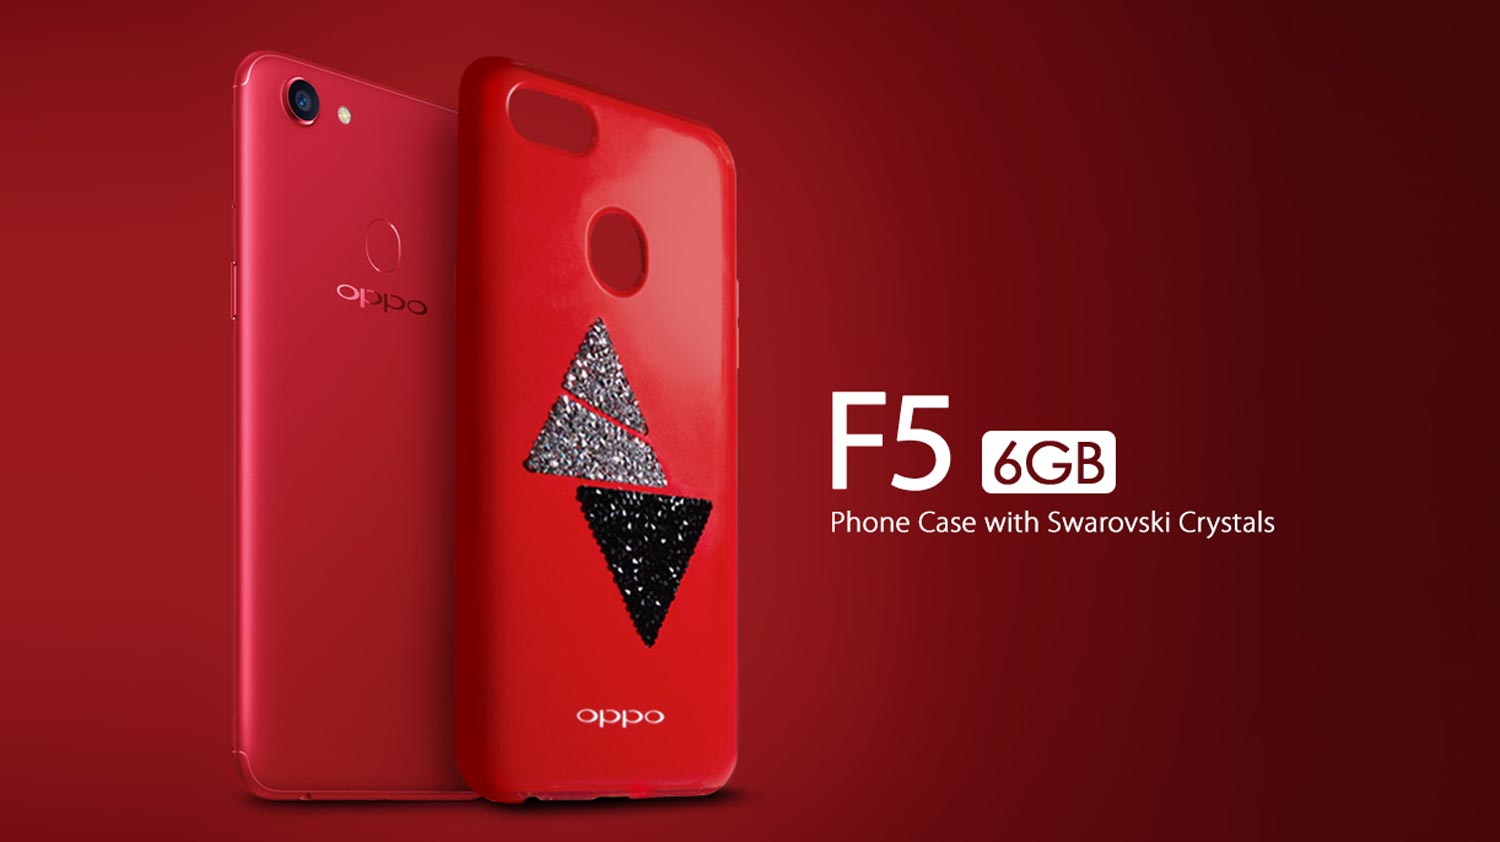 Kerangka Kristal Untuk Oppo F5 6GB Red Edition Dihasilkan Dengan Kerjasama Swarovski